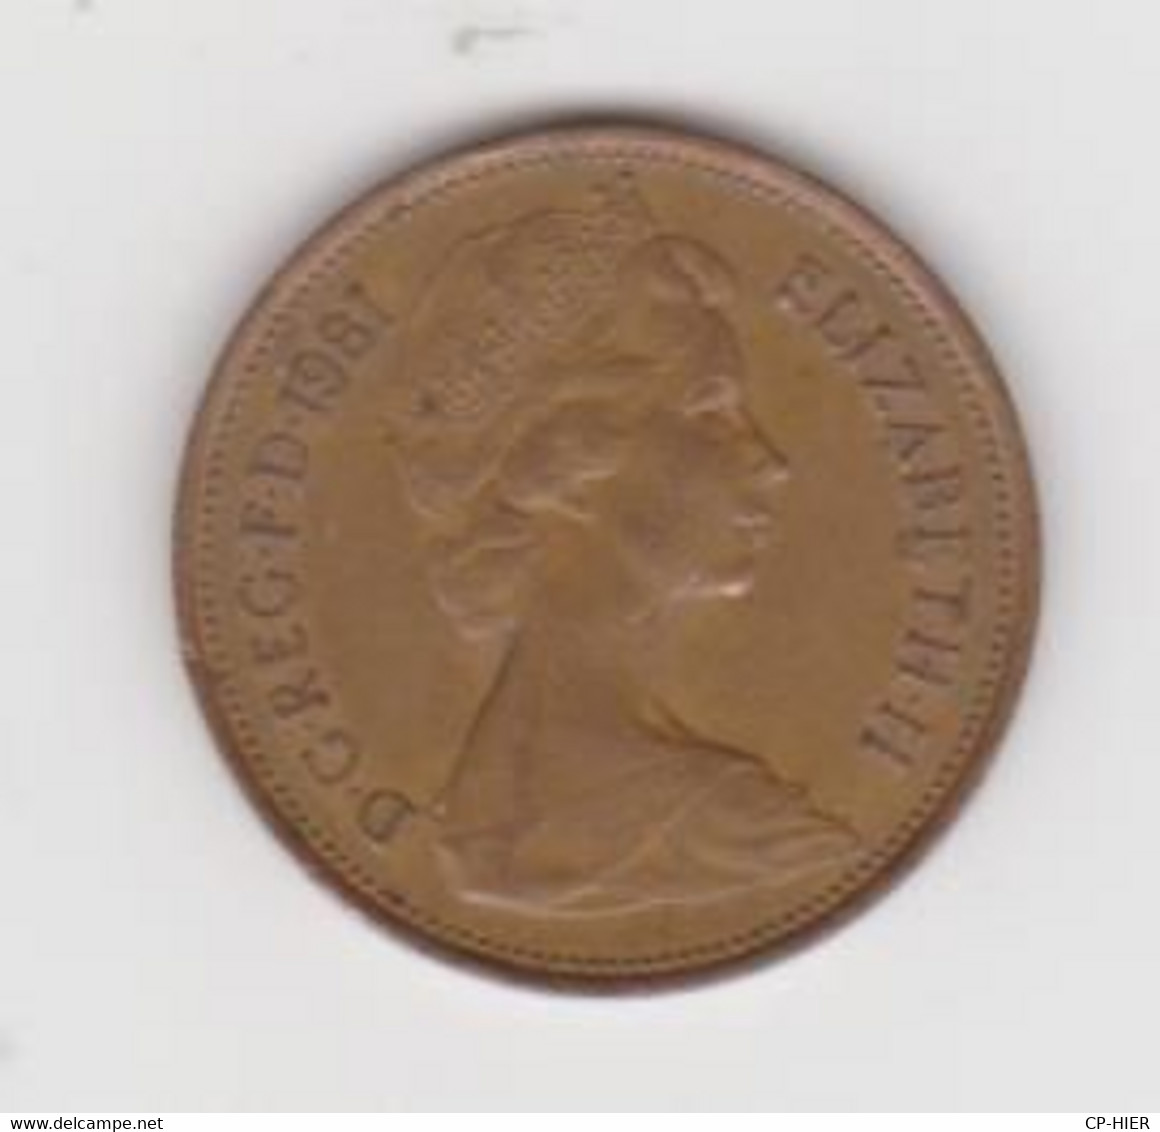 PIECE DE MONNAIE - ELIZABETH II 1981 - 2 NEW PENCE - 2 Pence & 2 New Pence